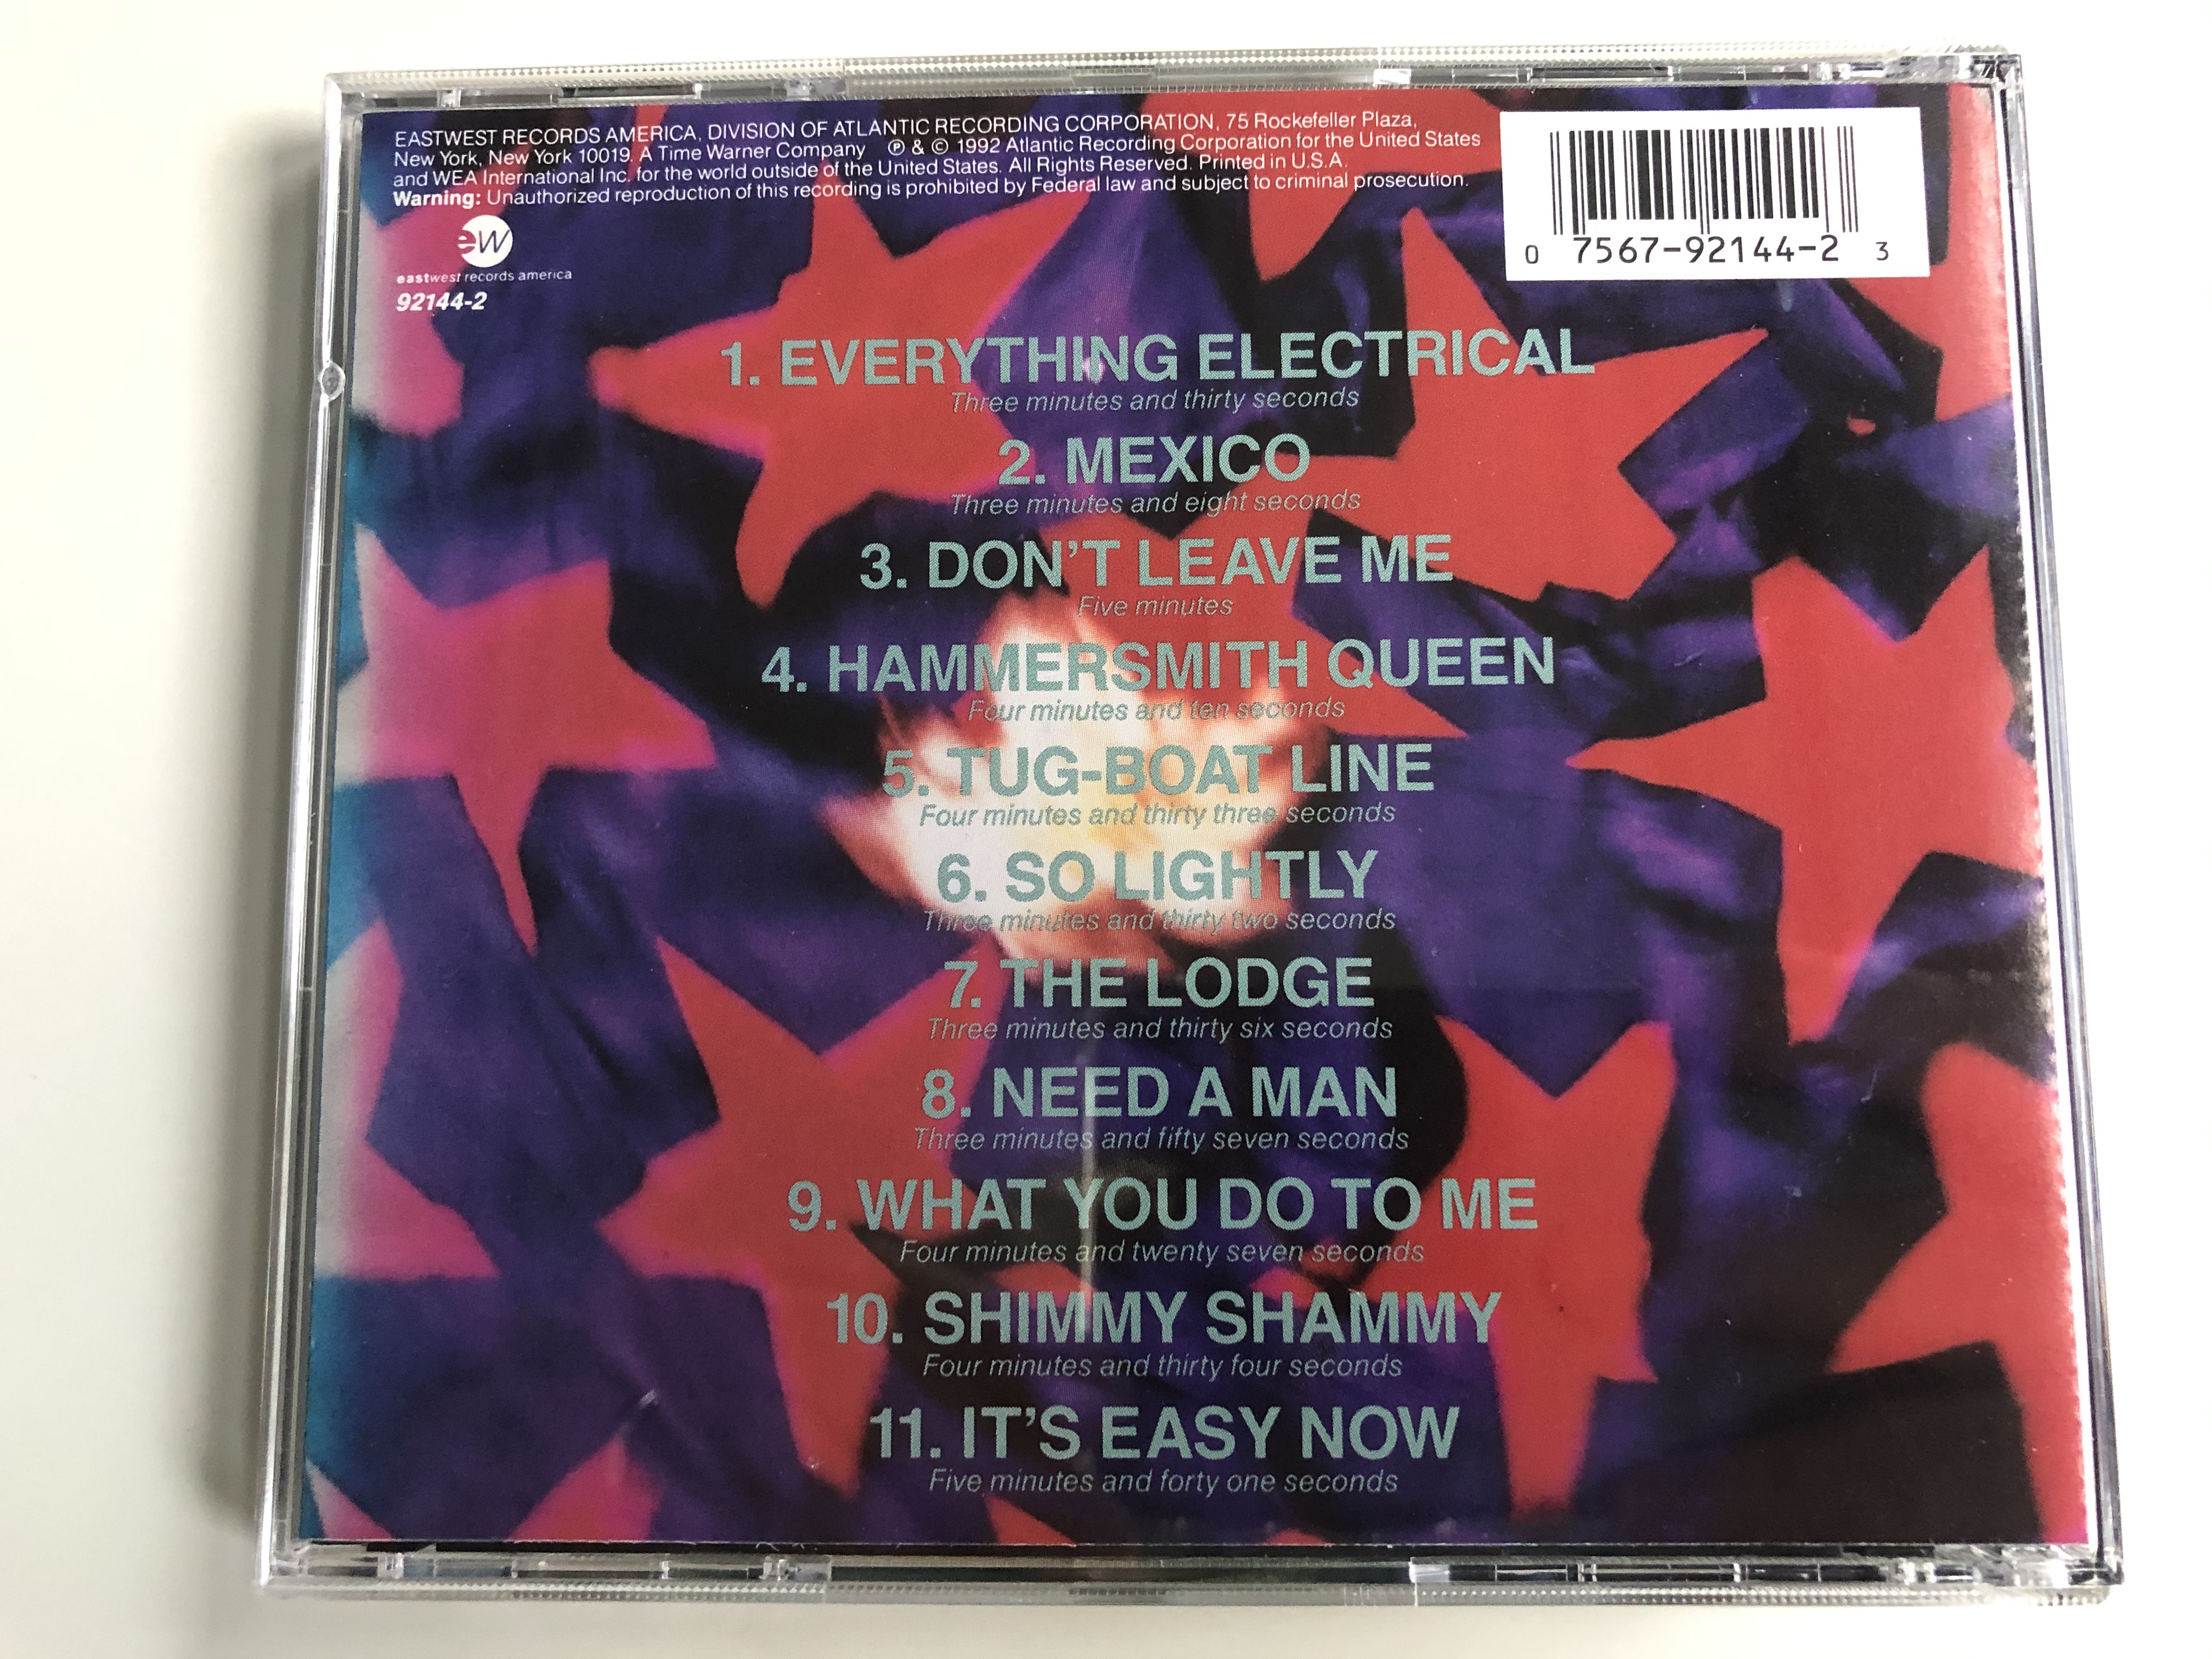 rumblefish-eastwest-records-america-audio-cd-1992-792144-2-7-.jpg